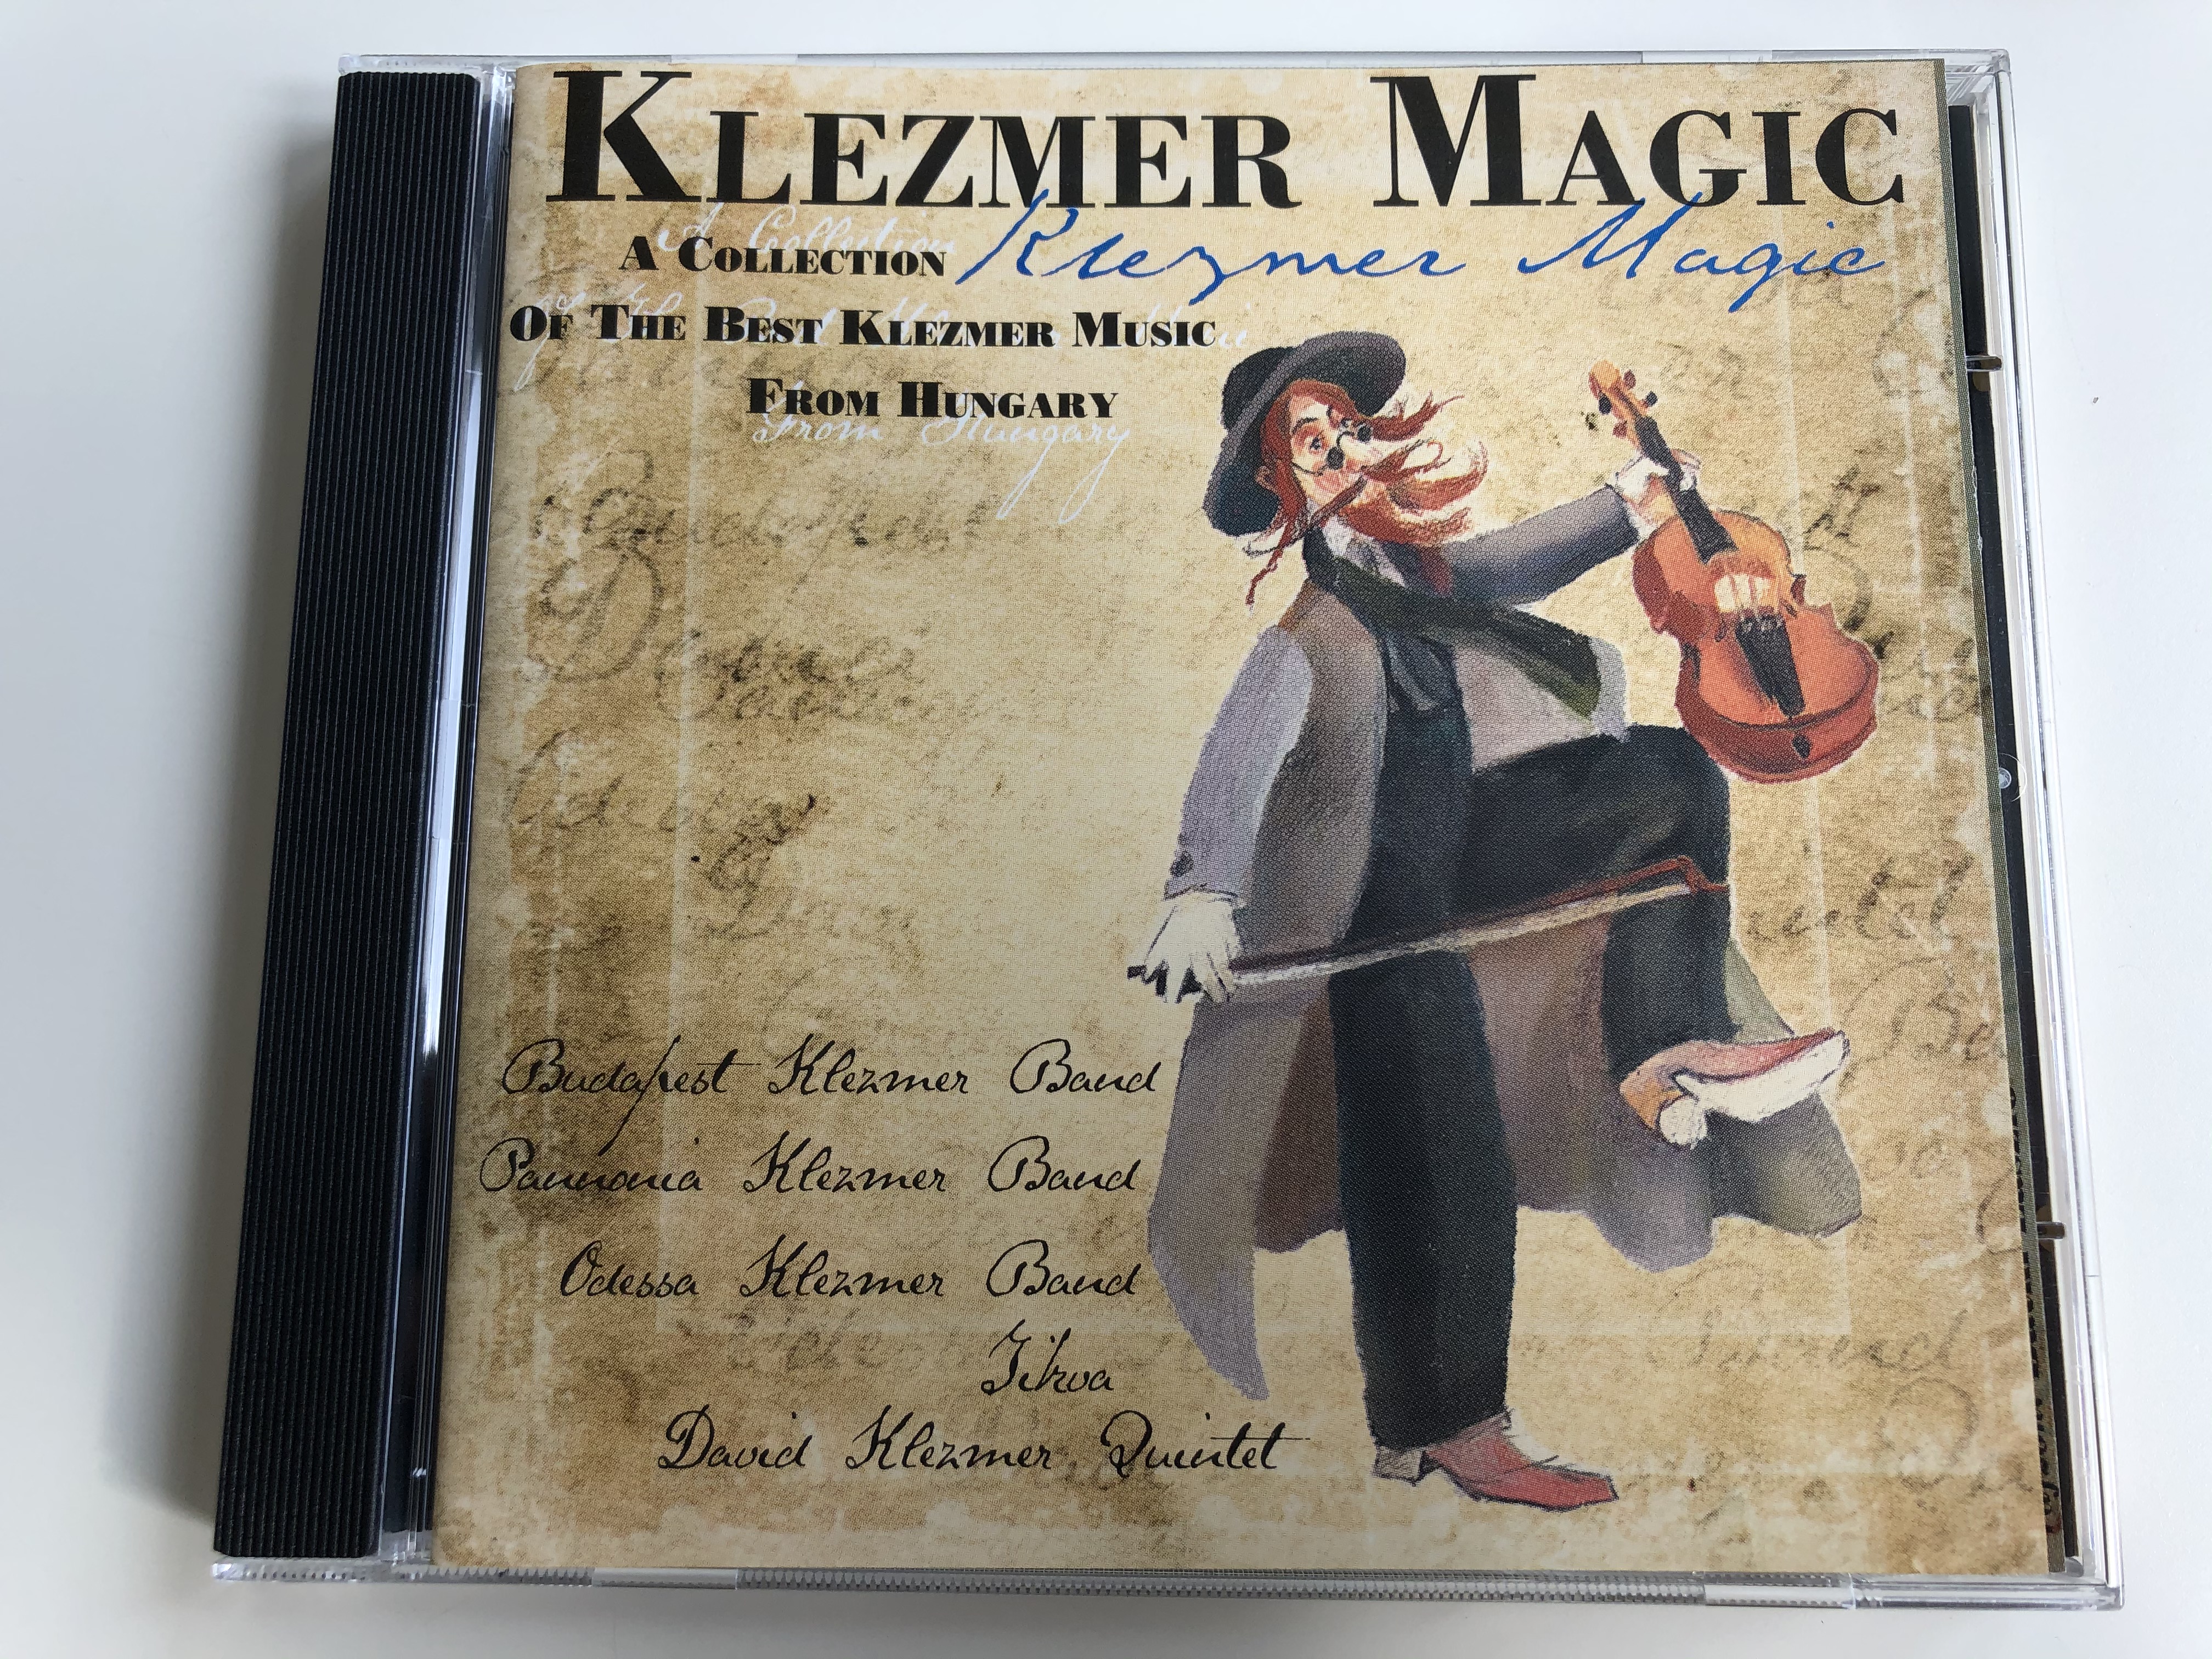 klezmer-magic-a-collection-of-the-best-klezmer-music-from-hungary-budapest-klezmer-band-pannonia-klezmer-band-odessa-klezmer-band-david-klezmer-quintet-bmg-ariola-hungary-audio-cd-2000-74-1-.jpg